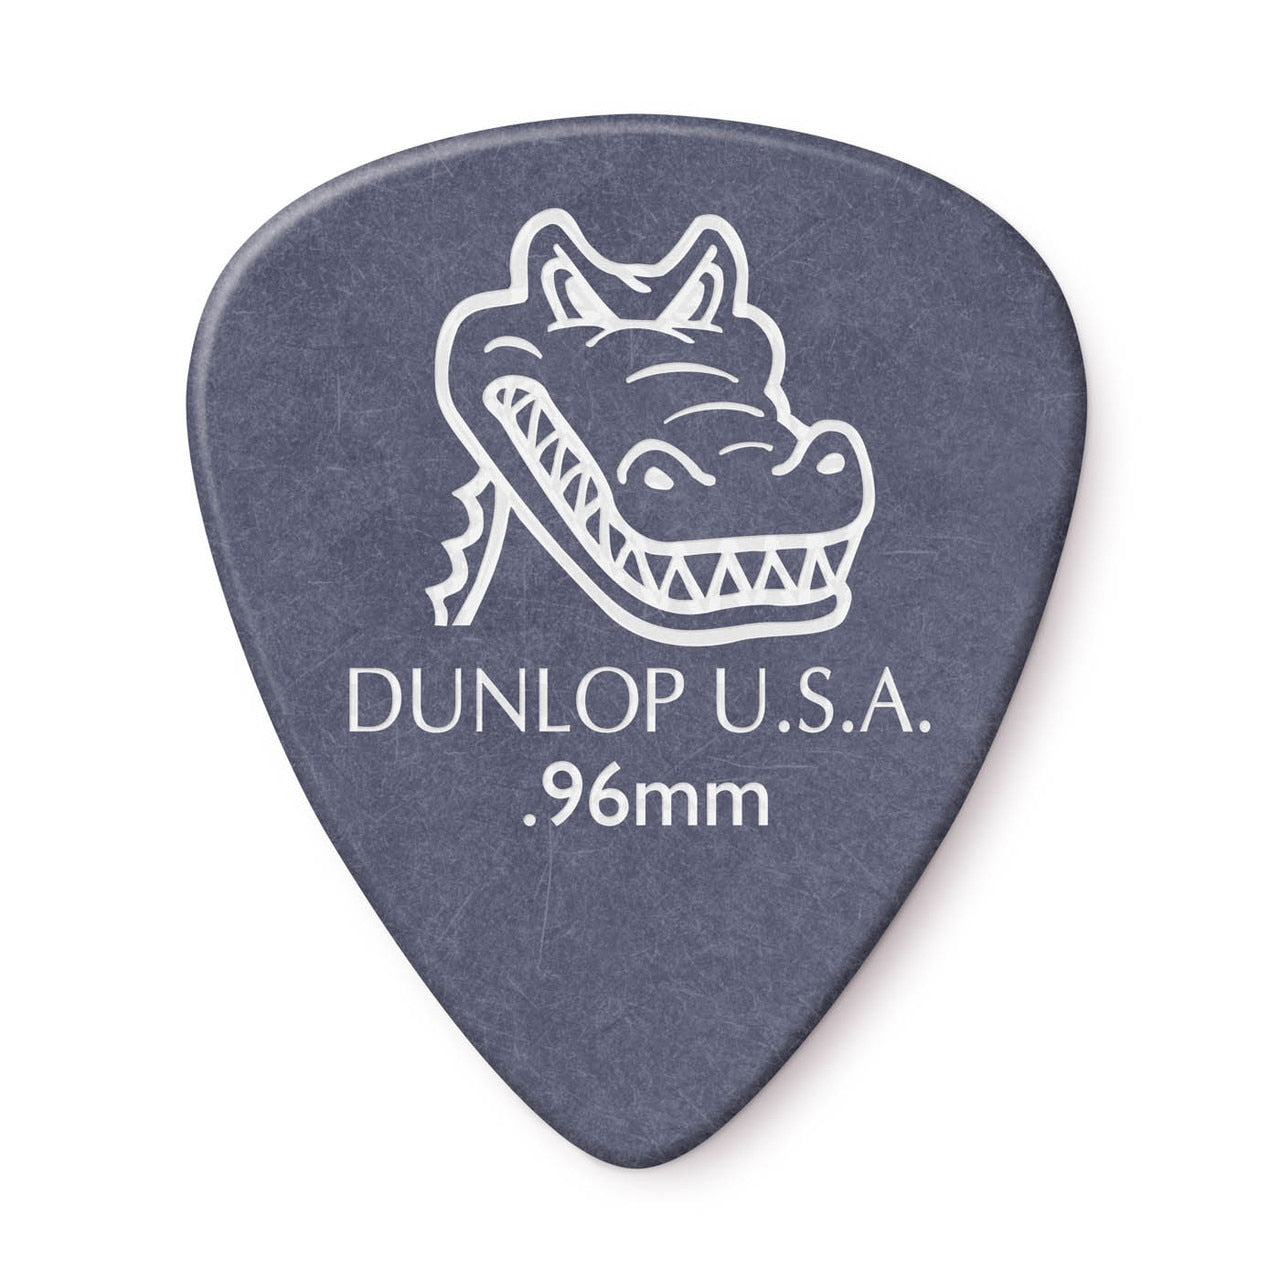 Dunlop Gator Grip Picks, 12-Pack, 0.96mm